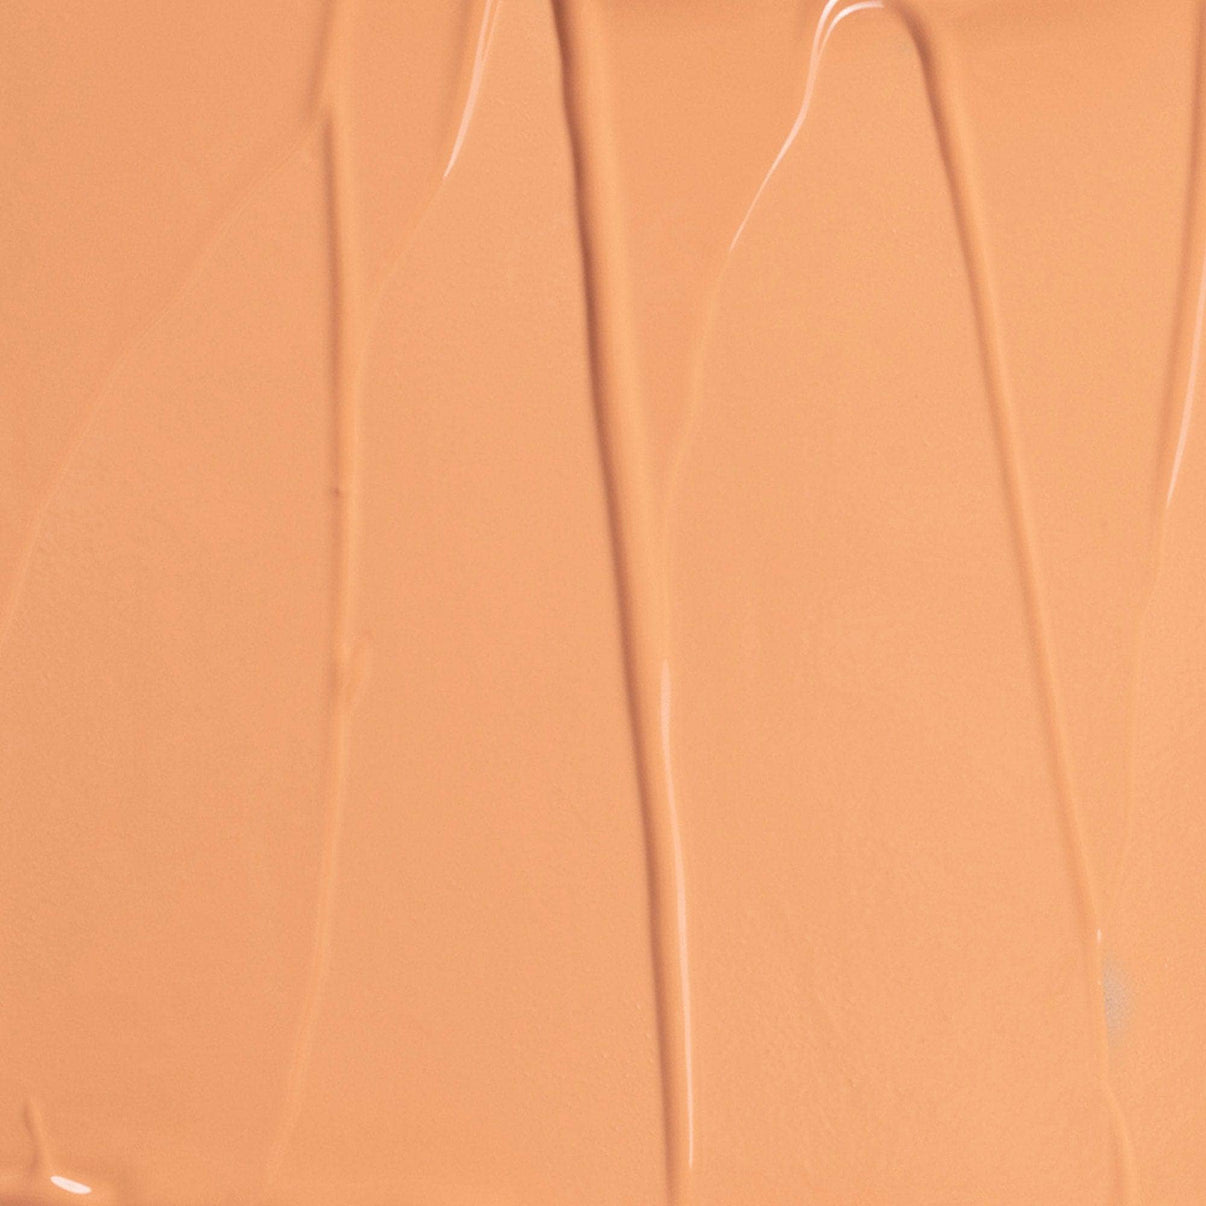 Nudefix cream concealer in shade nude 6 texture swatch